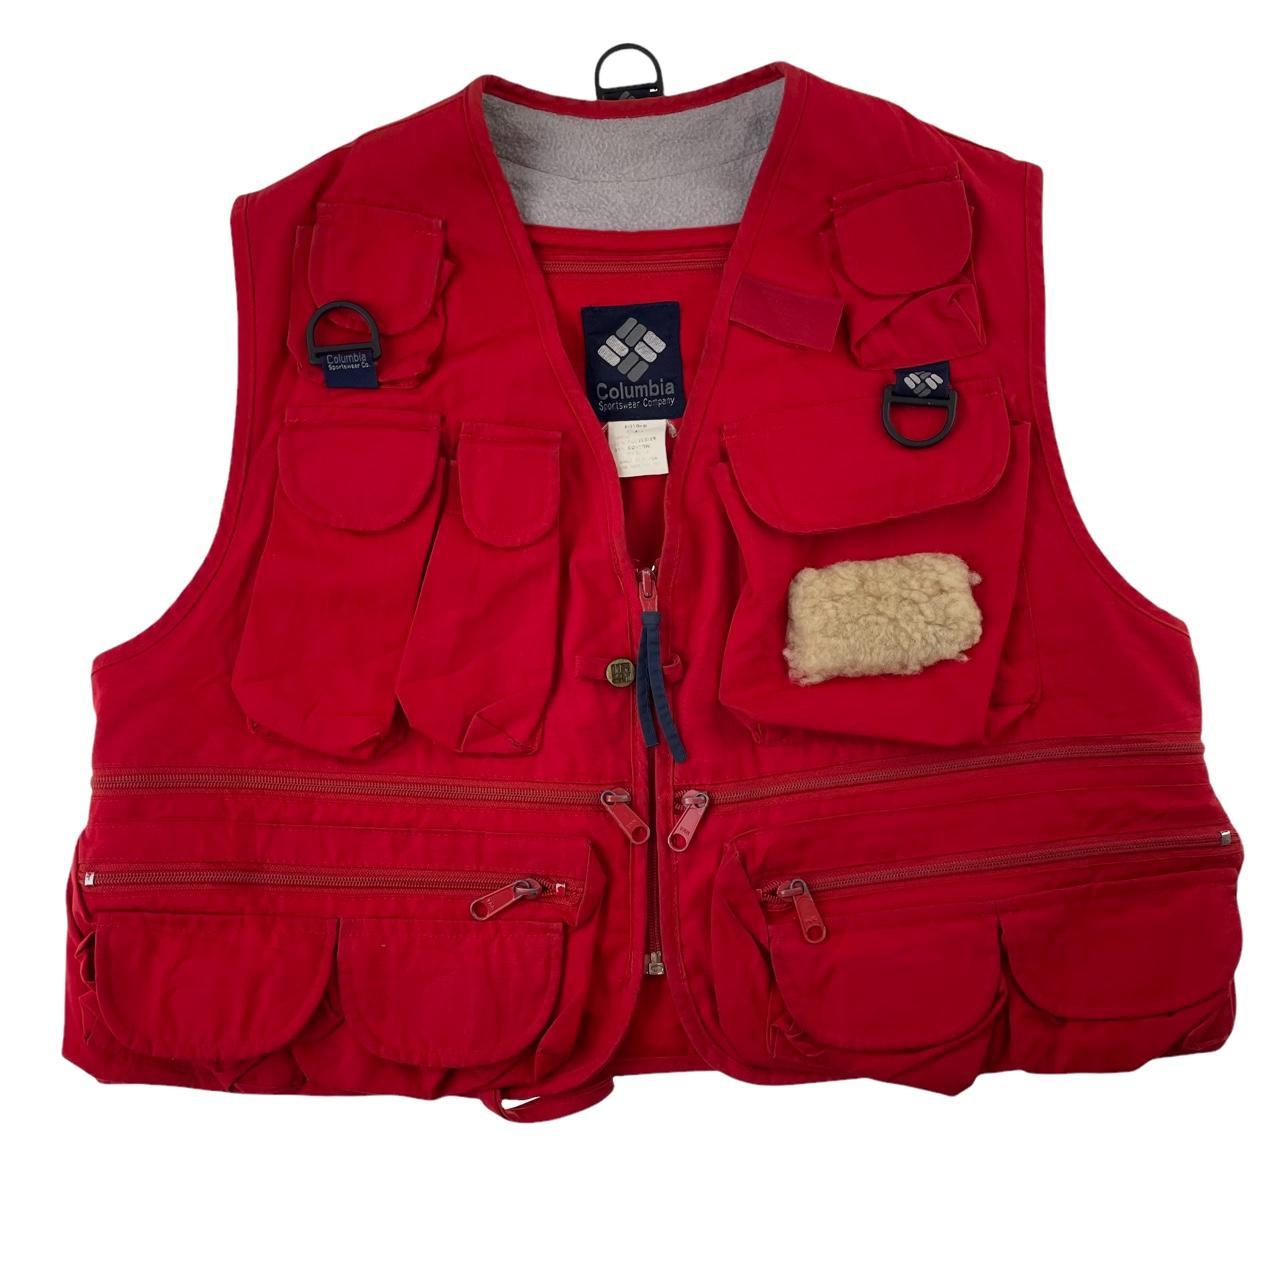 Vintage Columbia tactical fishing vest jacket size - Depop